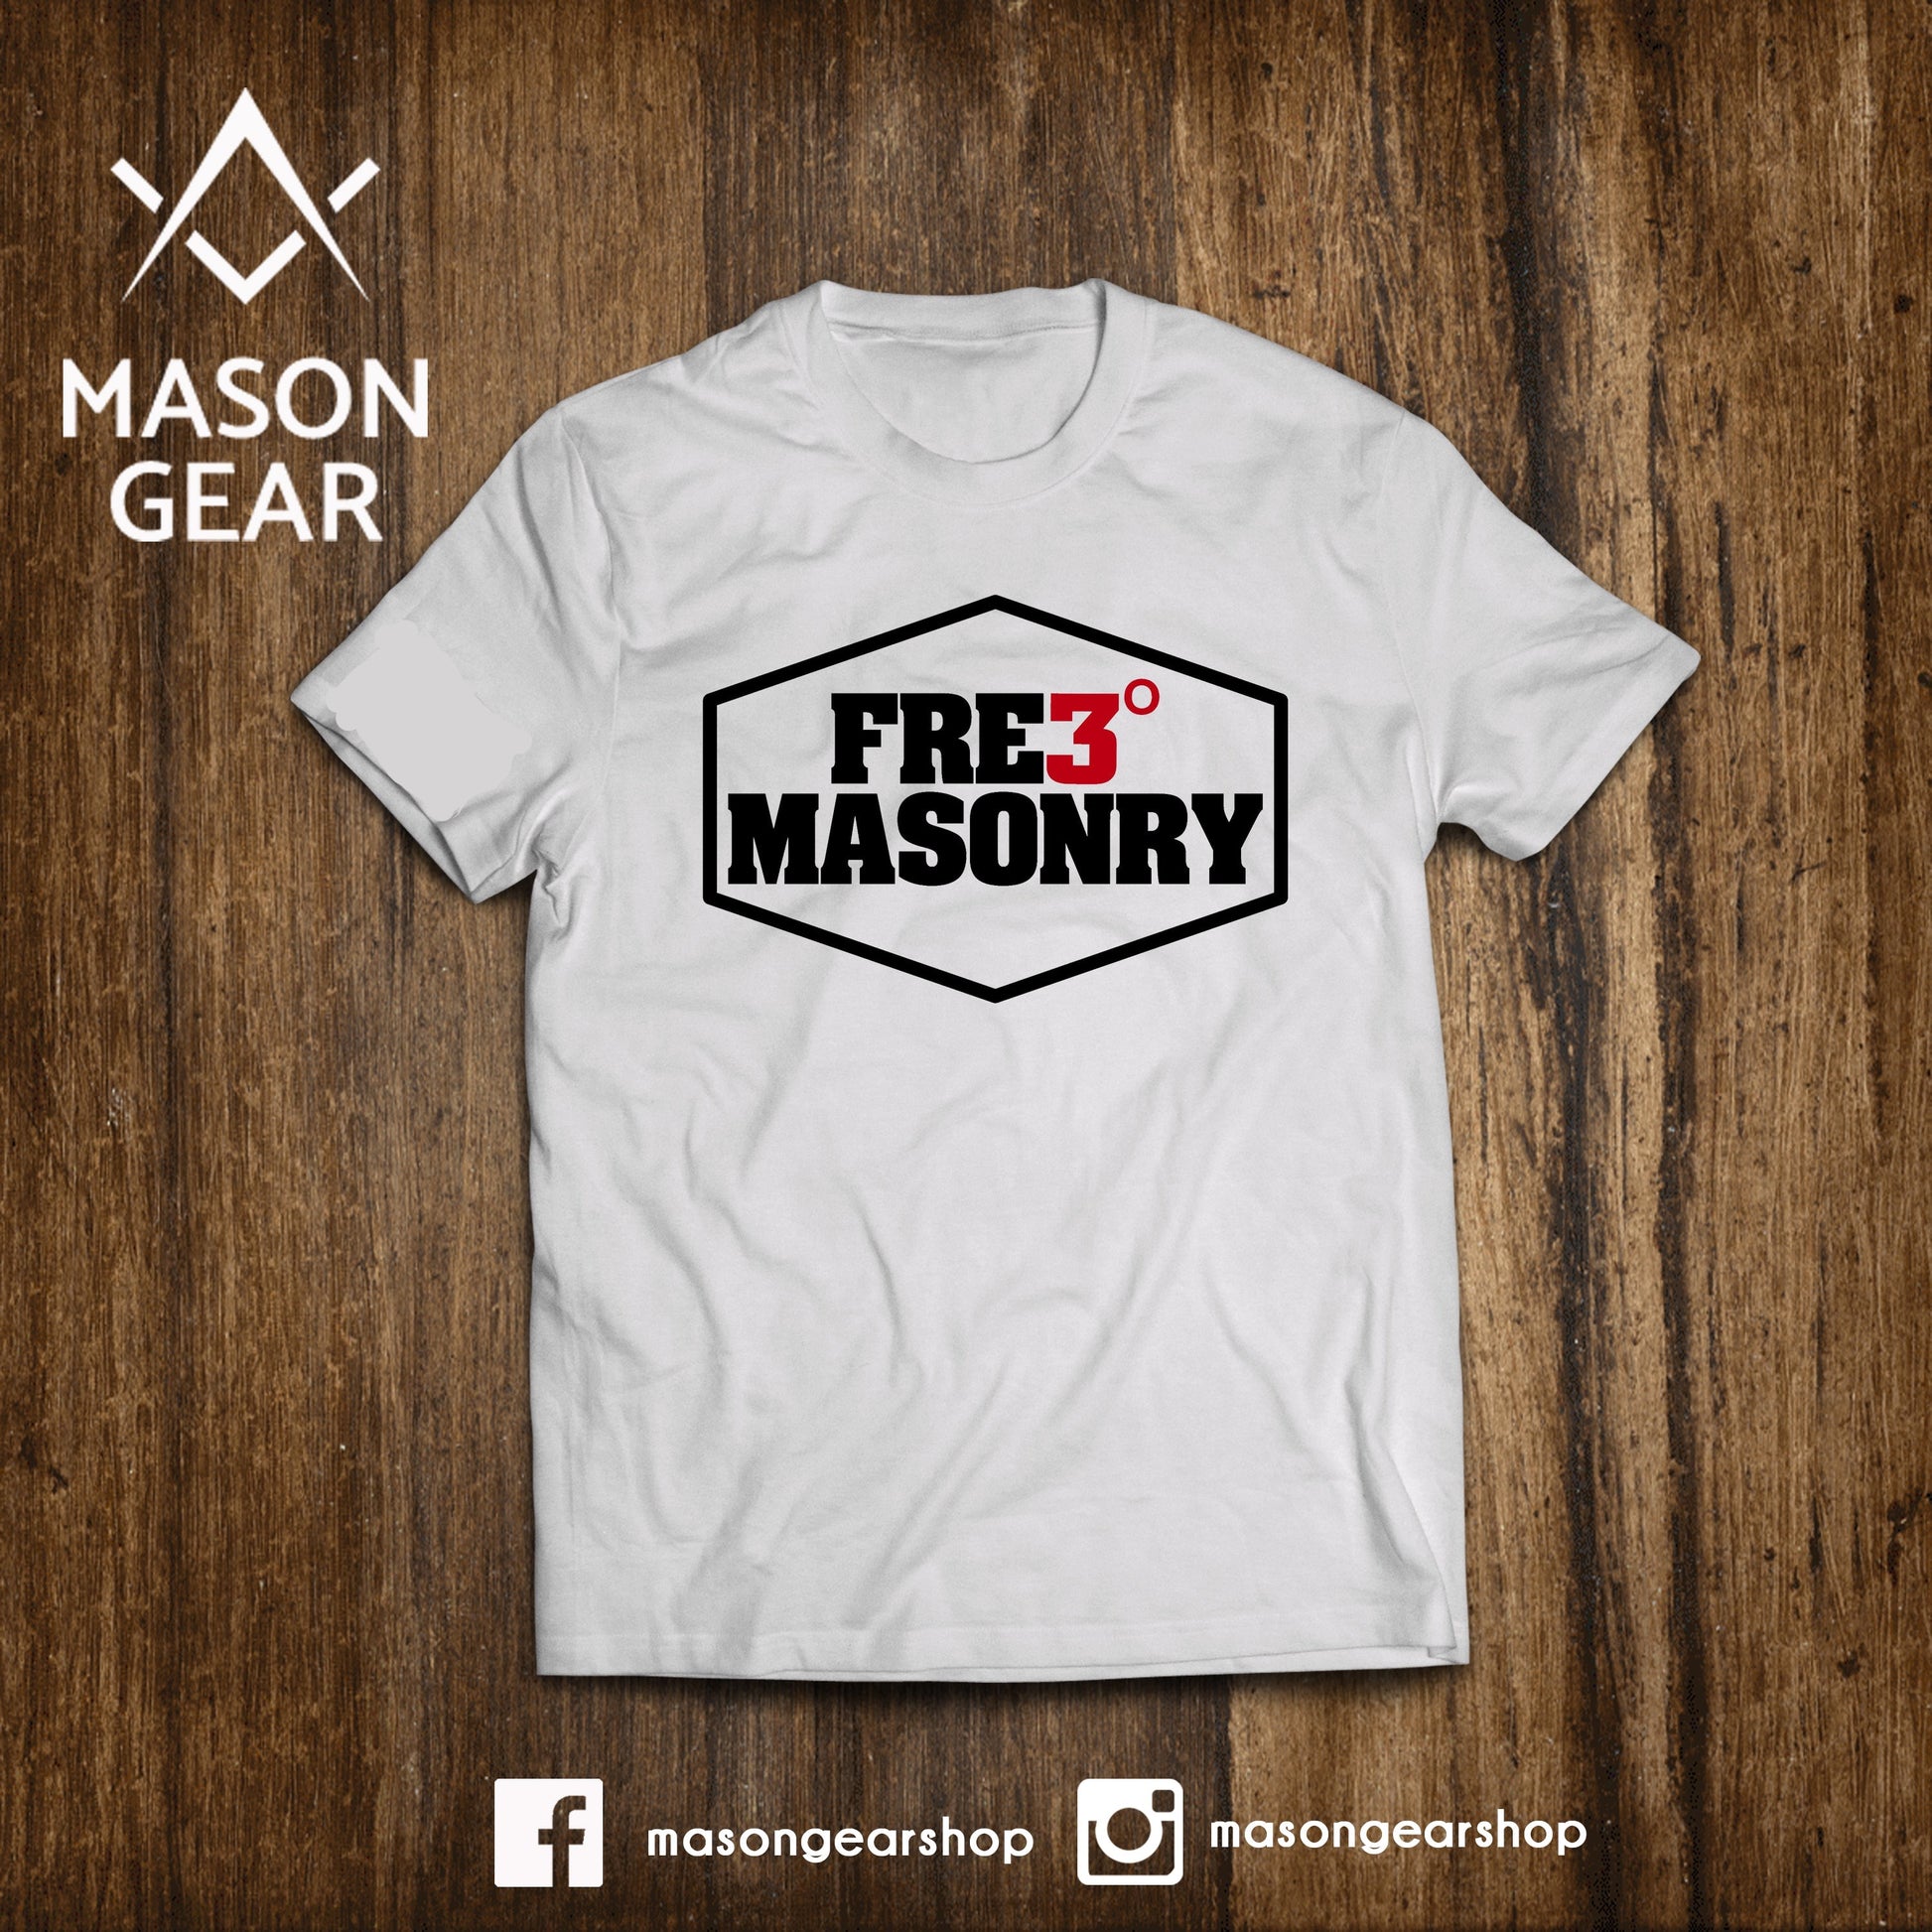 FRE3MASONRY  - tshirt - Mason Gear Shop